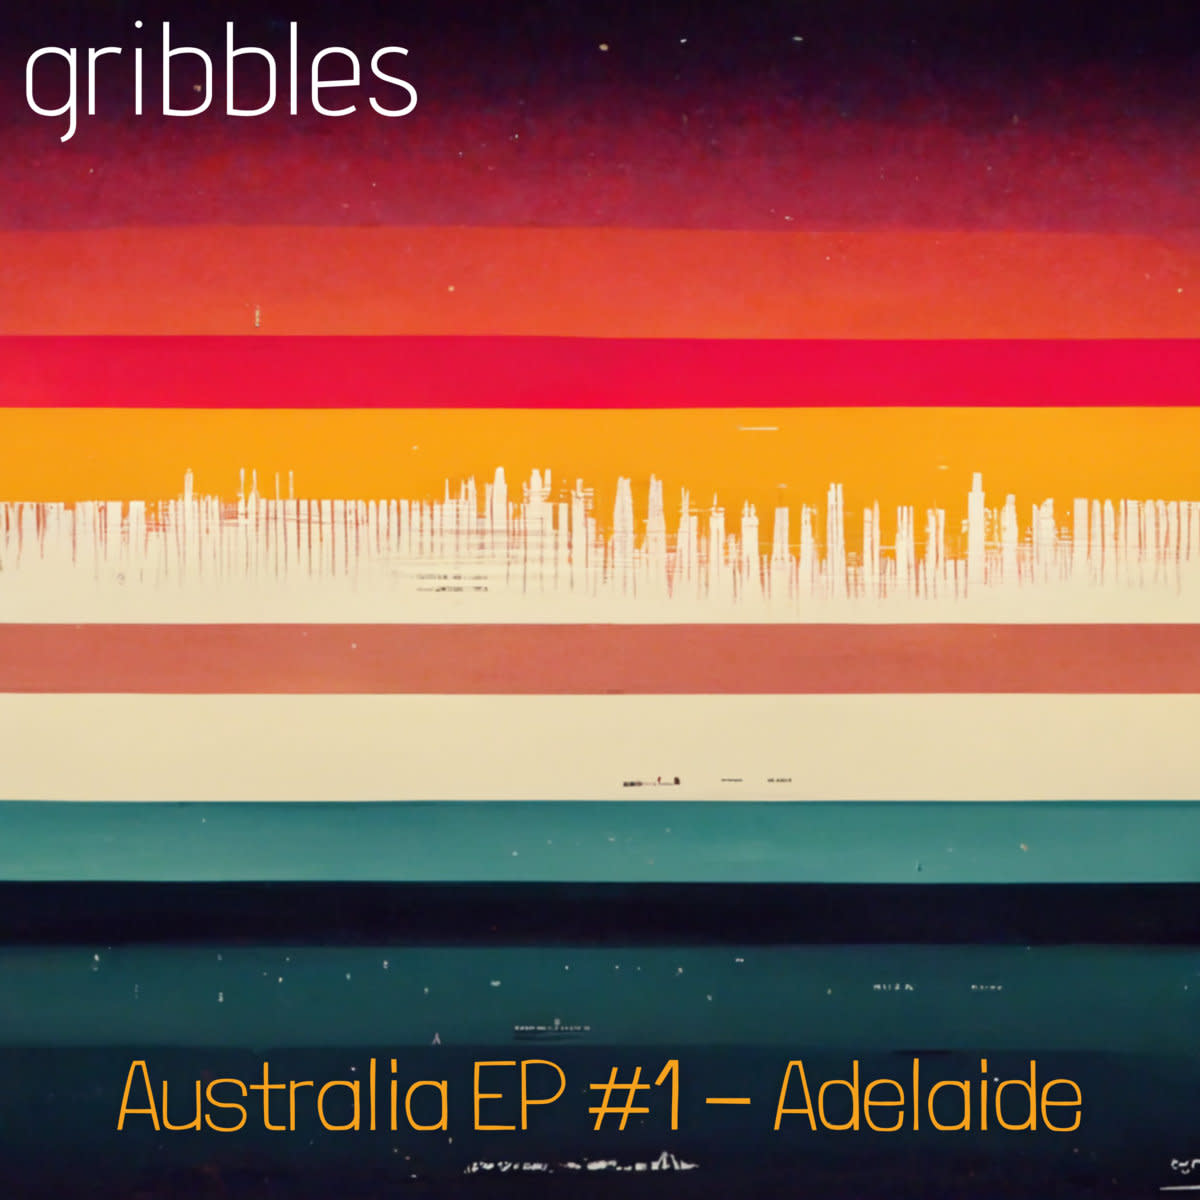 gribbles, "Australia EP #1 – Adelaide" (2022)